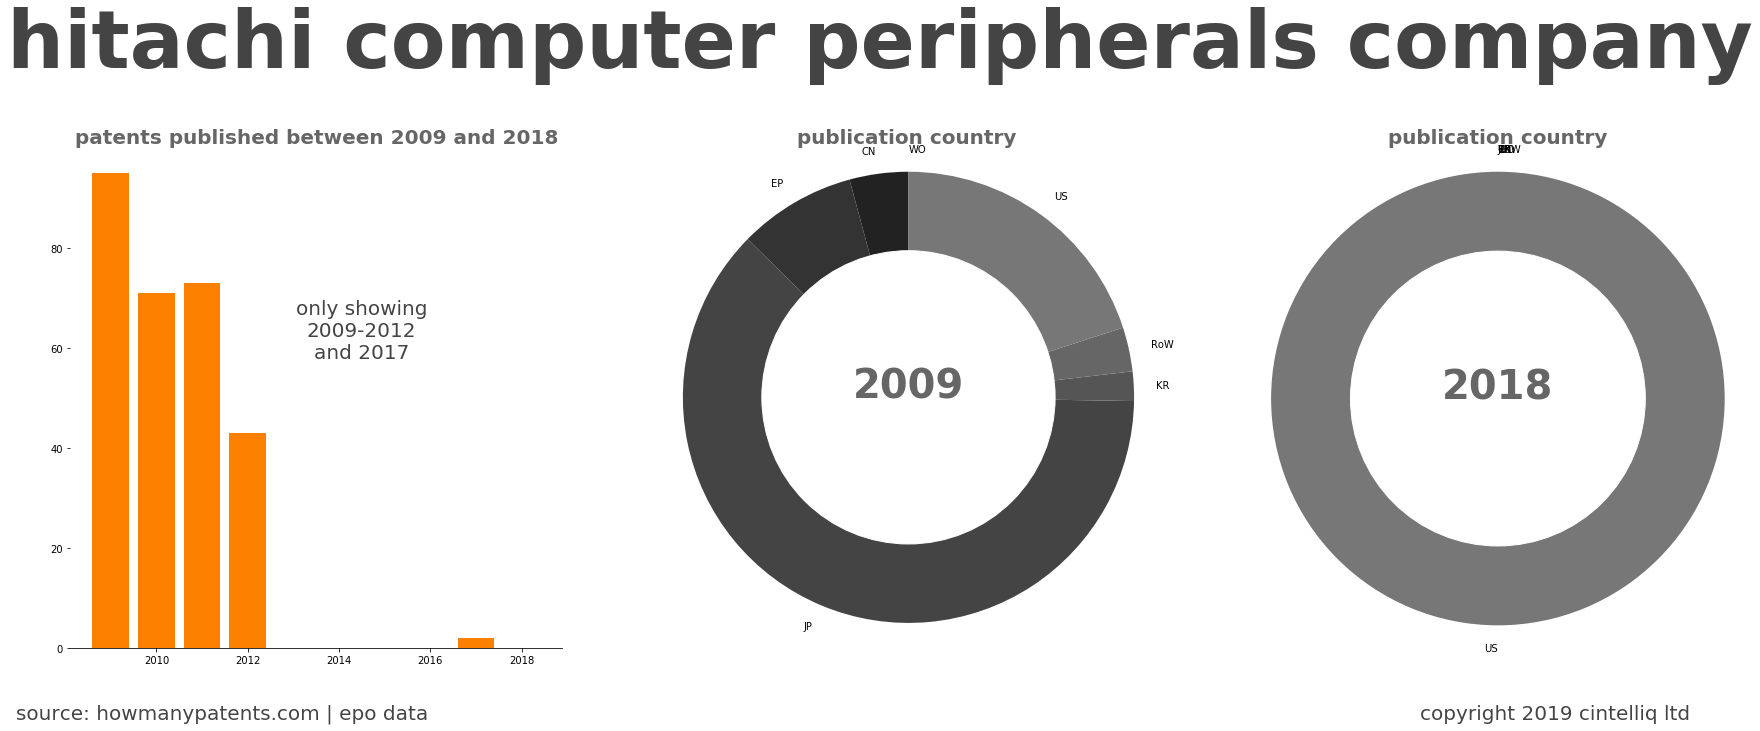 summary of patents for Hitachi Computer Peripherals Company